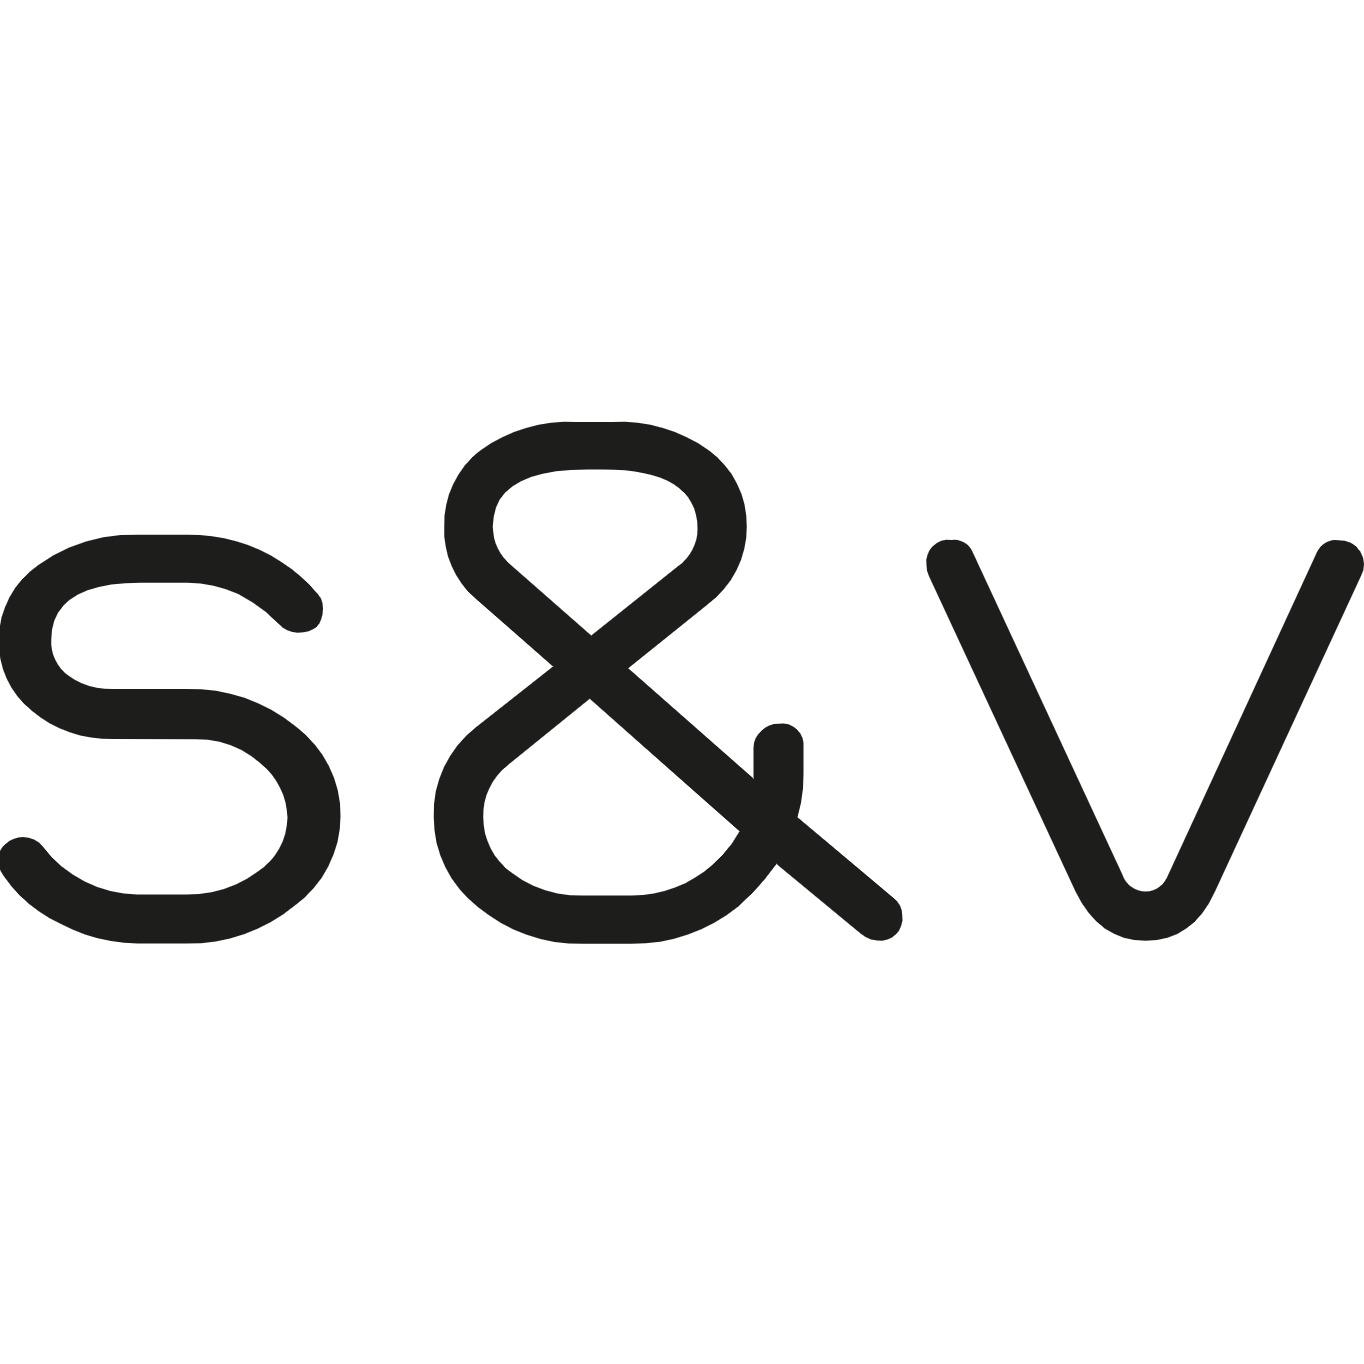 Salmoiraghi & Viganò Logo